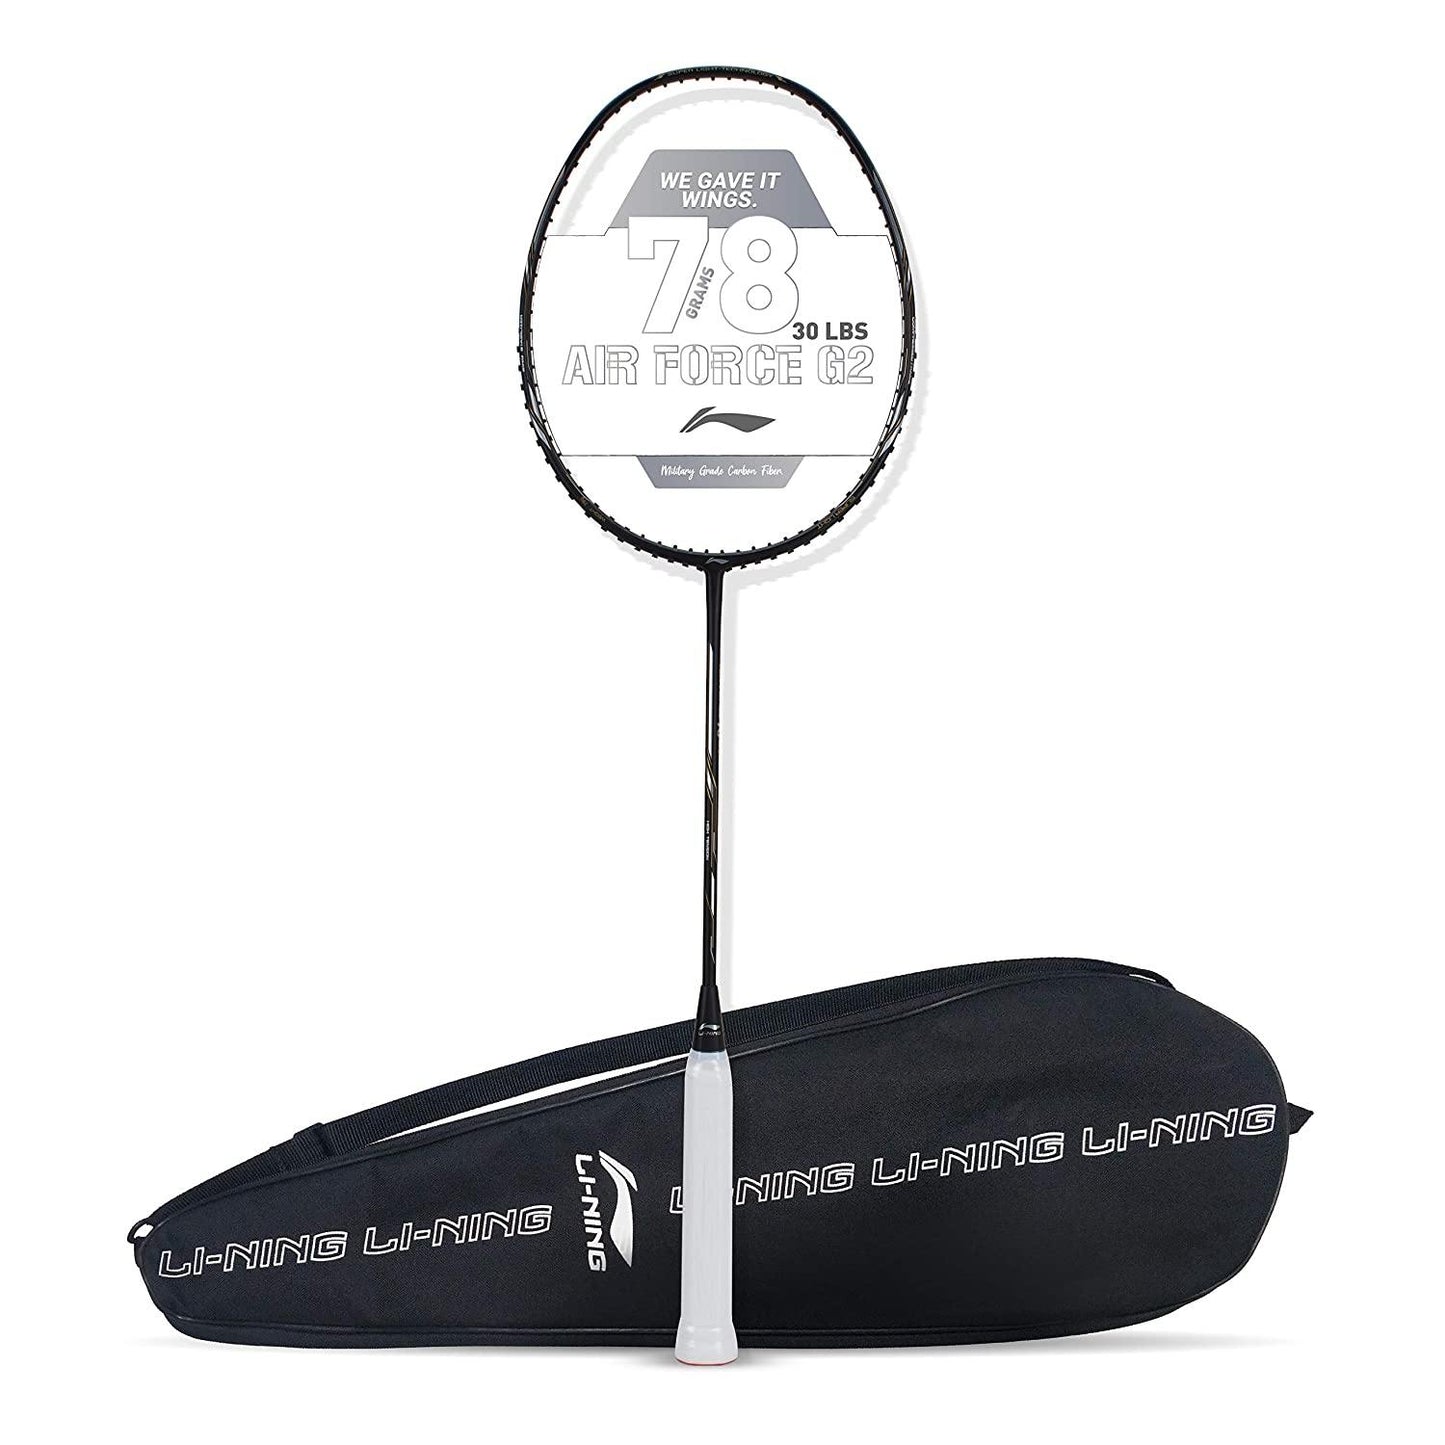 Li-Ning Air Force 78 G2 Carbon Fibre Badminton Racket with Free Full Cover Black/Silver - Best Price online Prokicksports.com